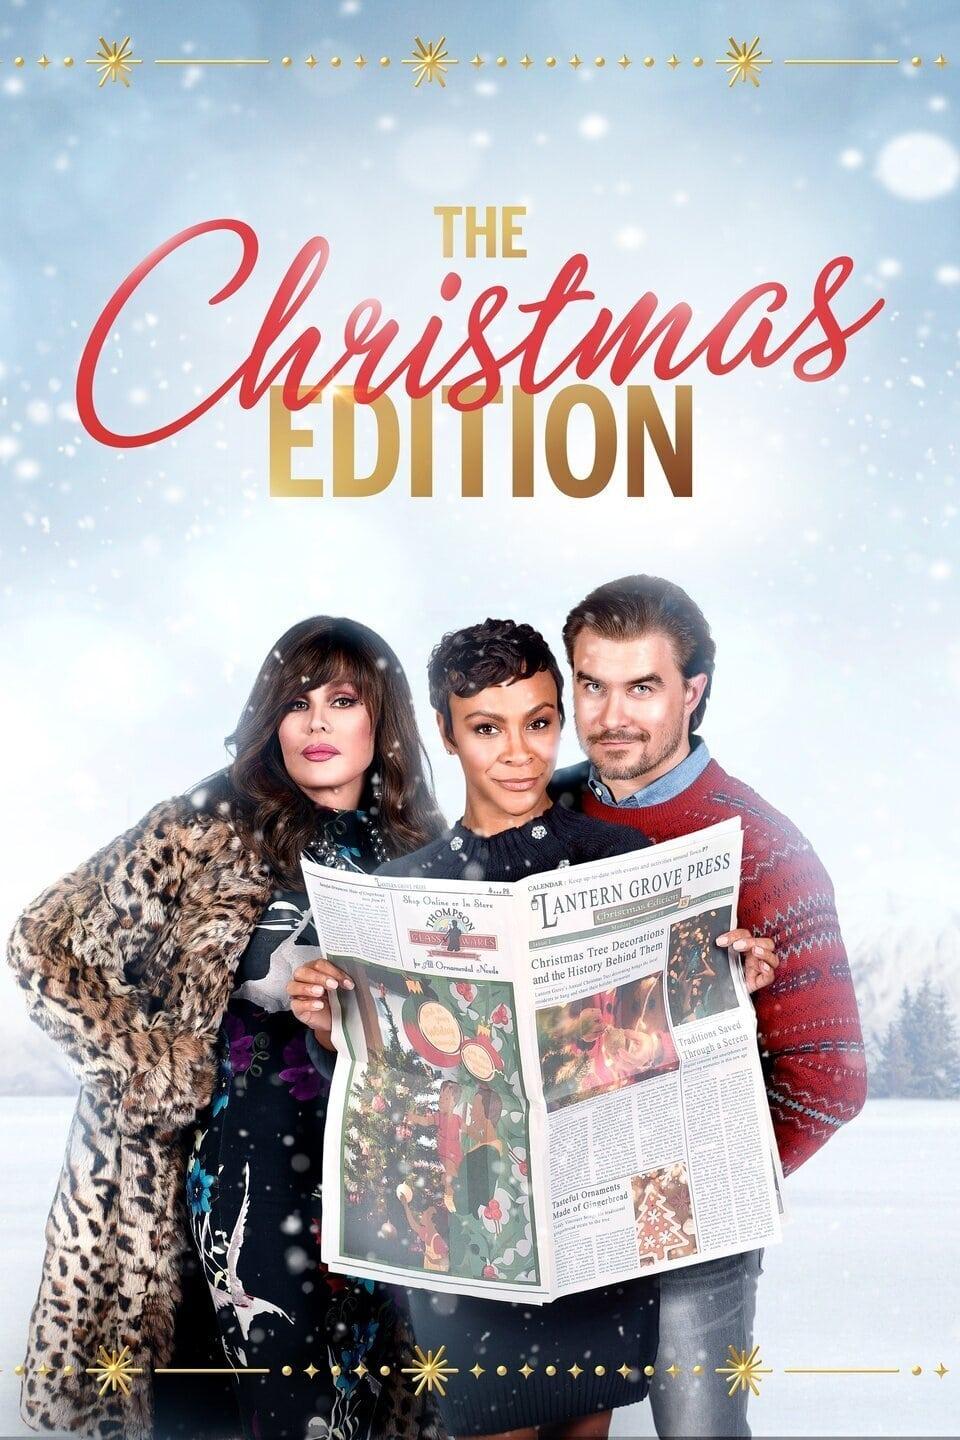 The Christmas Edition poster